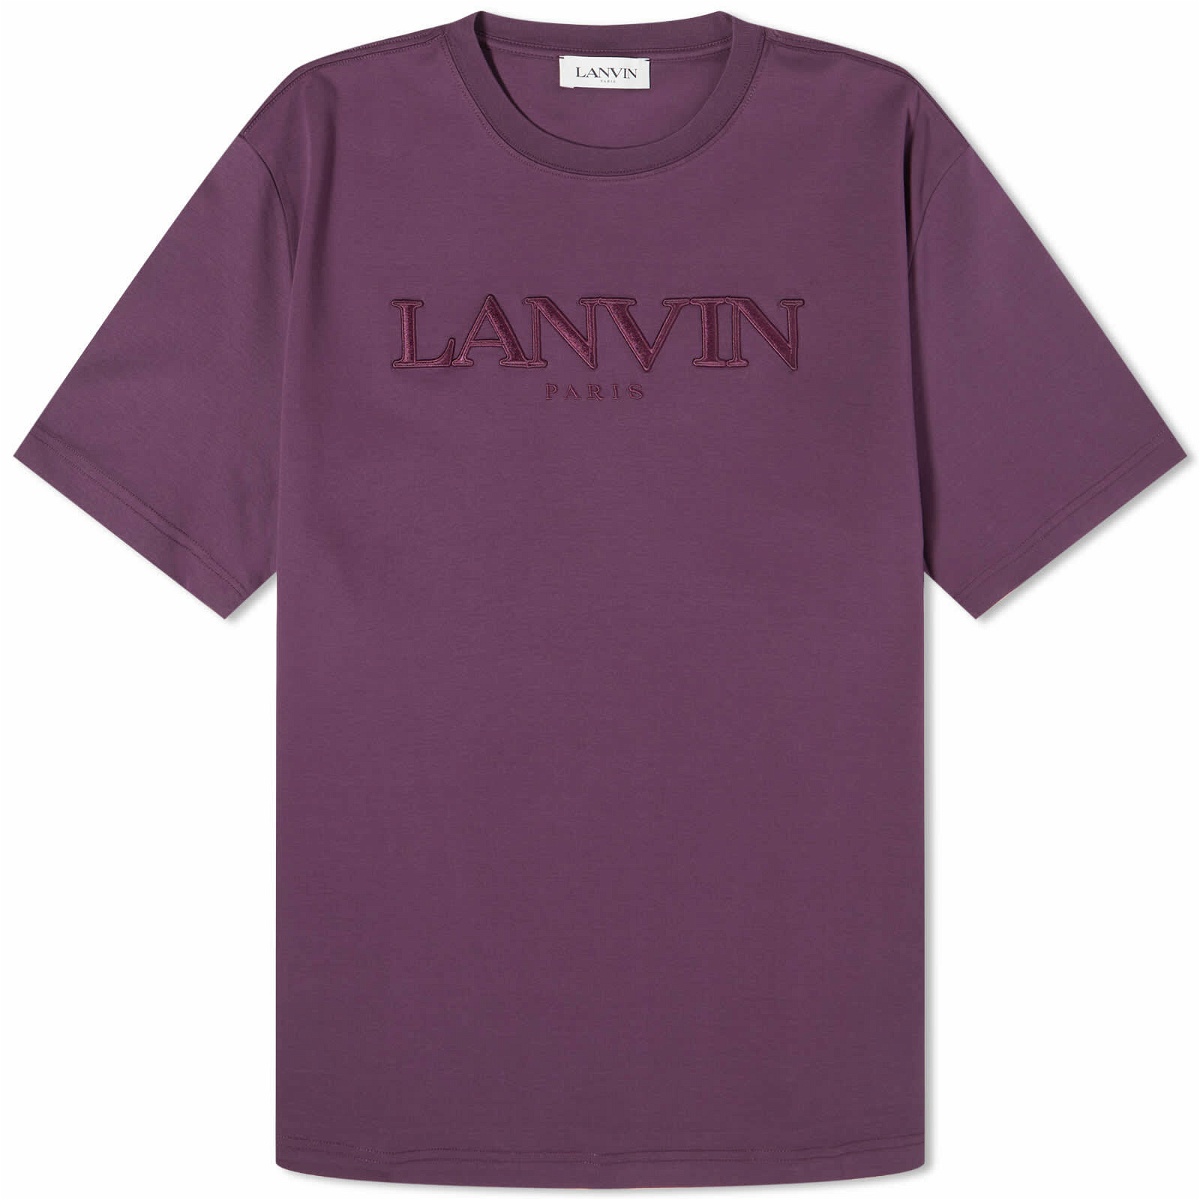 Lanvin Men's Logo T-Shirt in Cassis